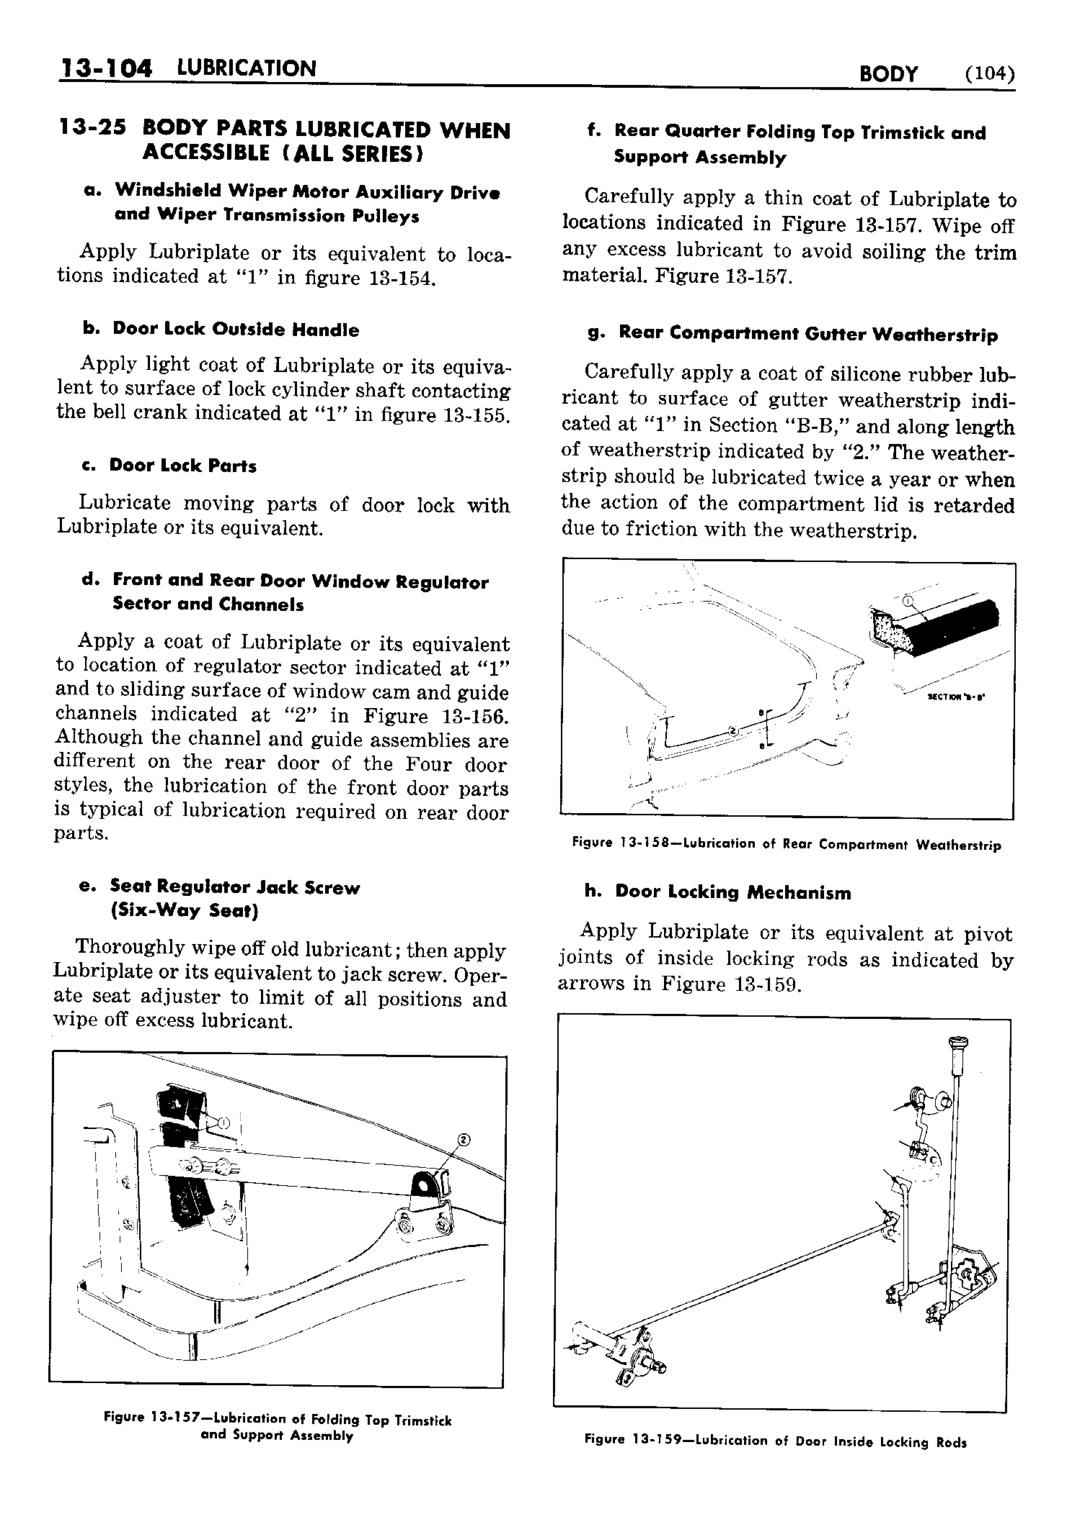 n_1958 Buick Body Service Manual-105-105.jpg